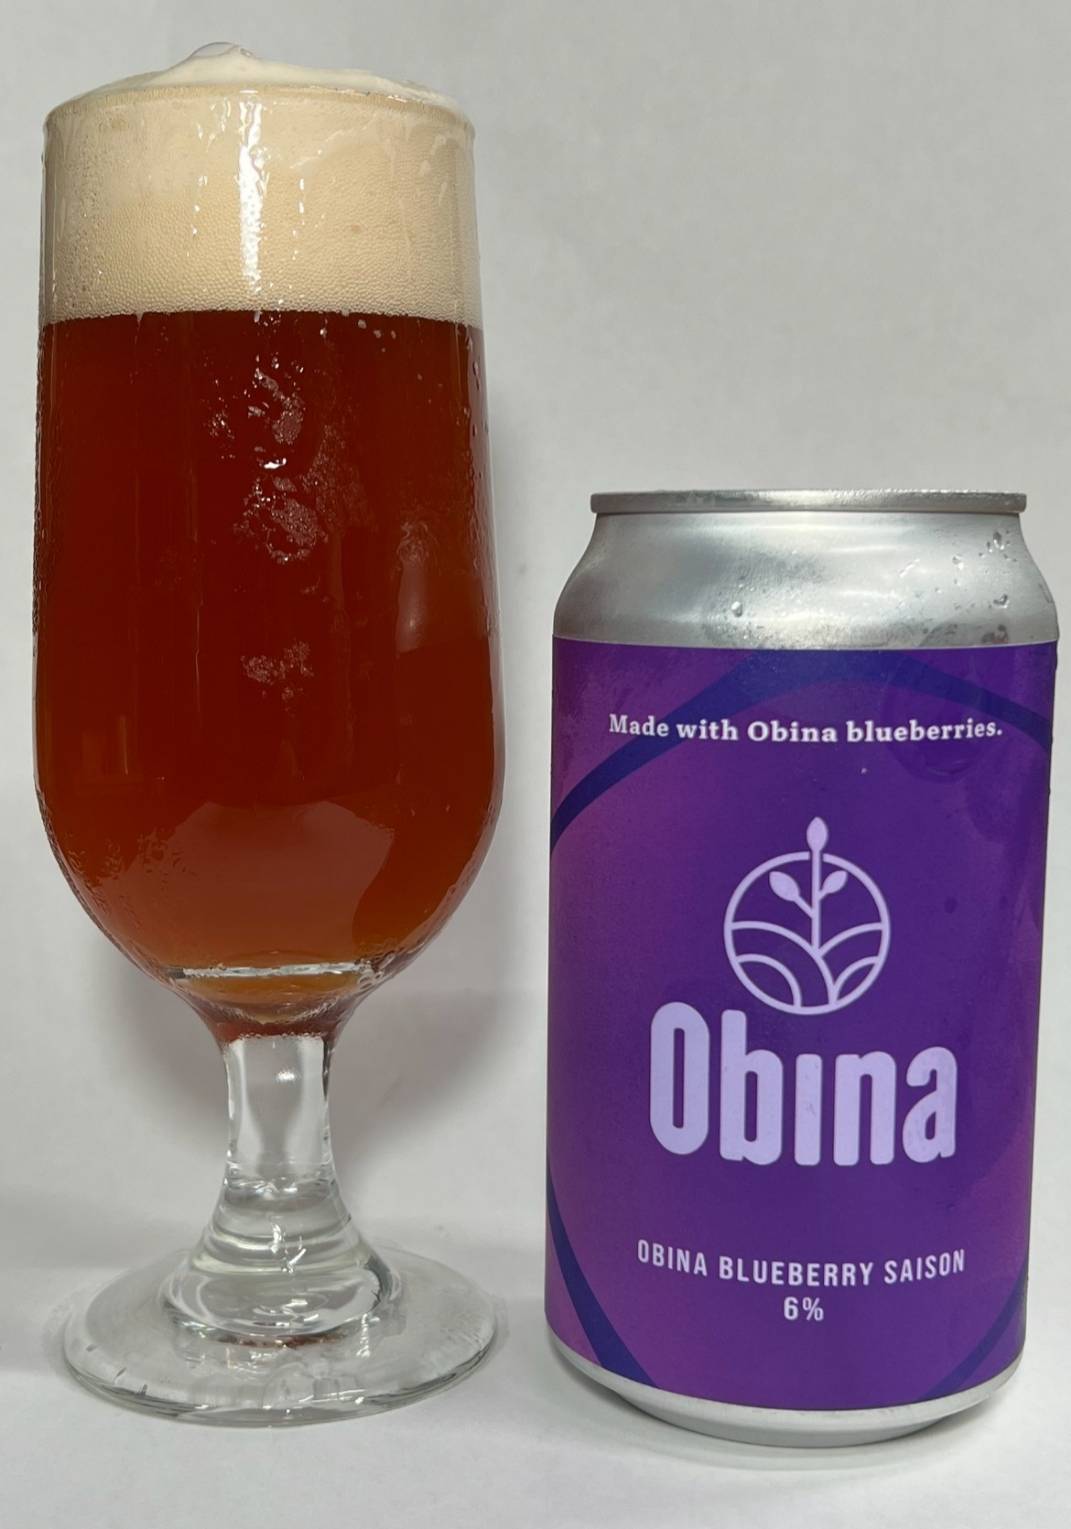 Obina Blueberry Saison - 1 Can